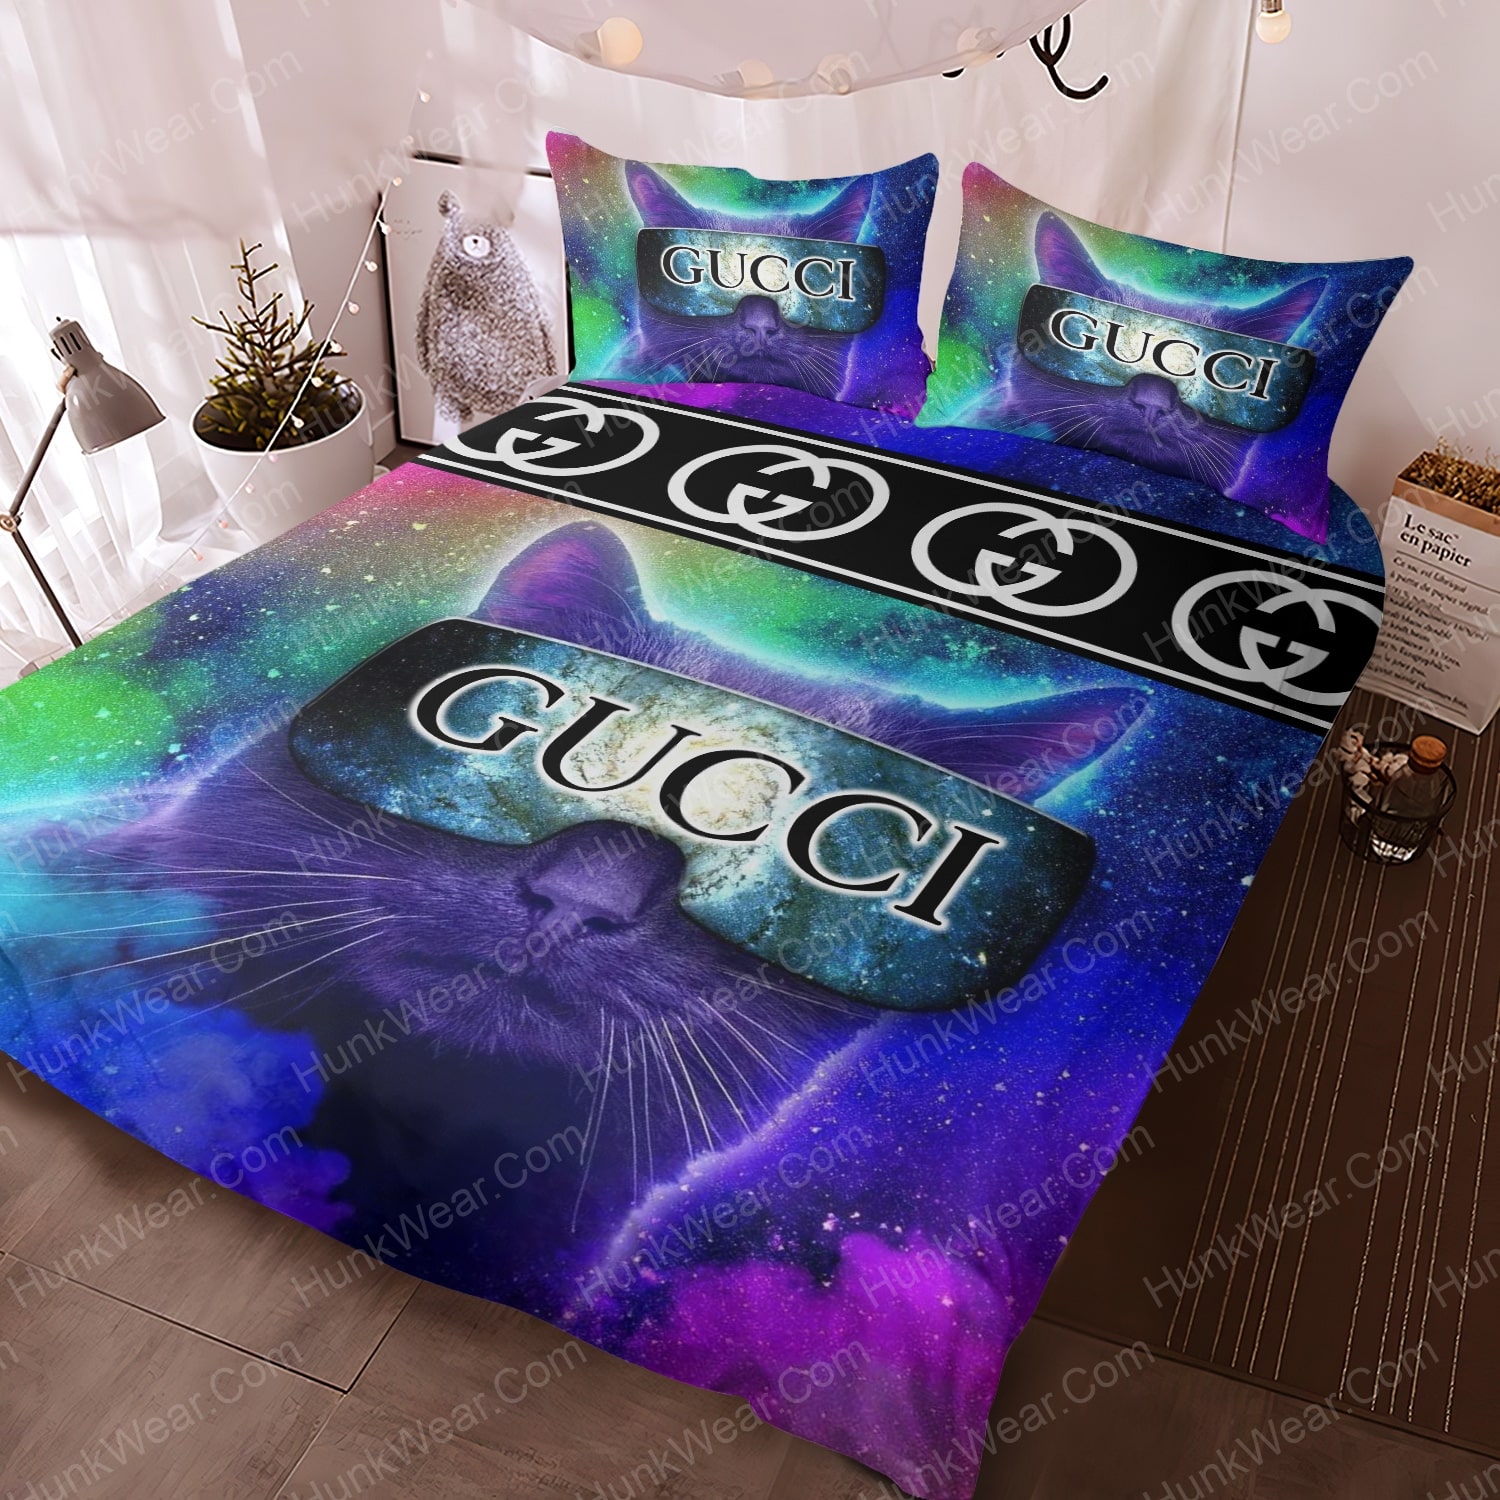 gucci cute cat wearing glasses bed set bedding set 1